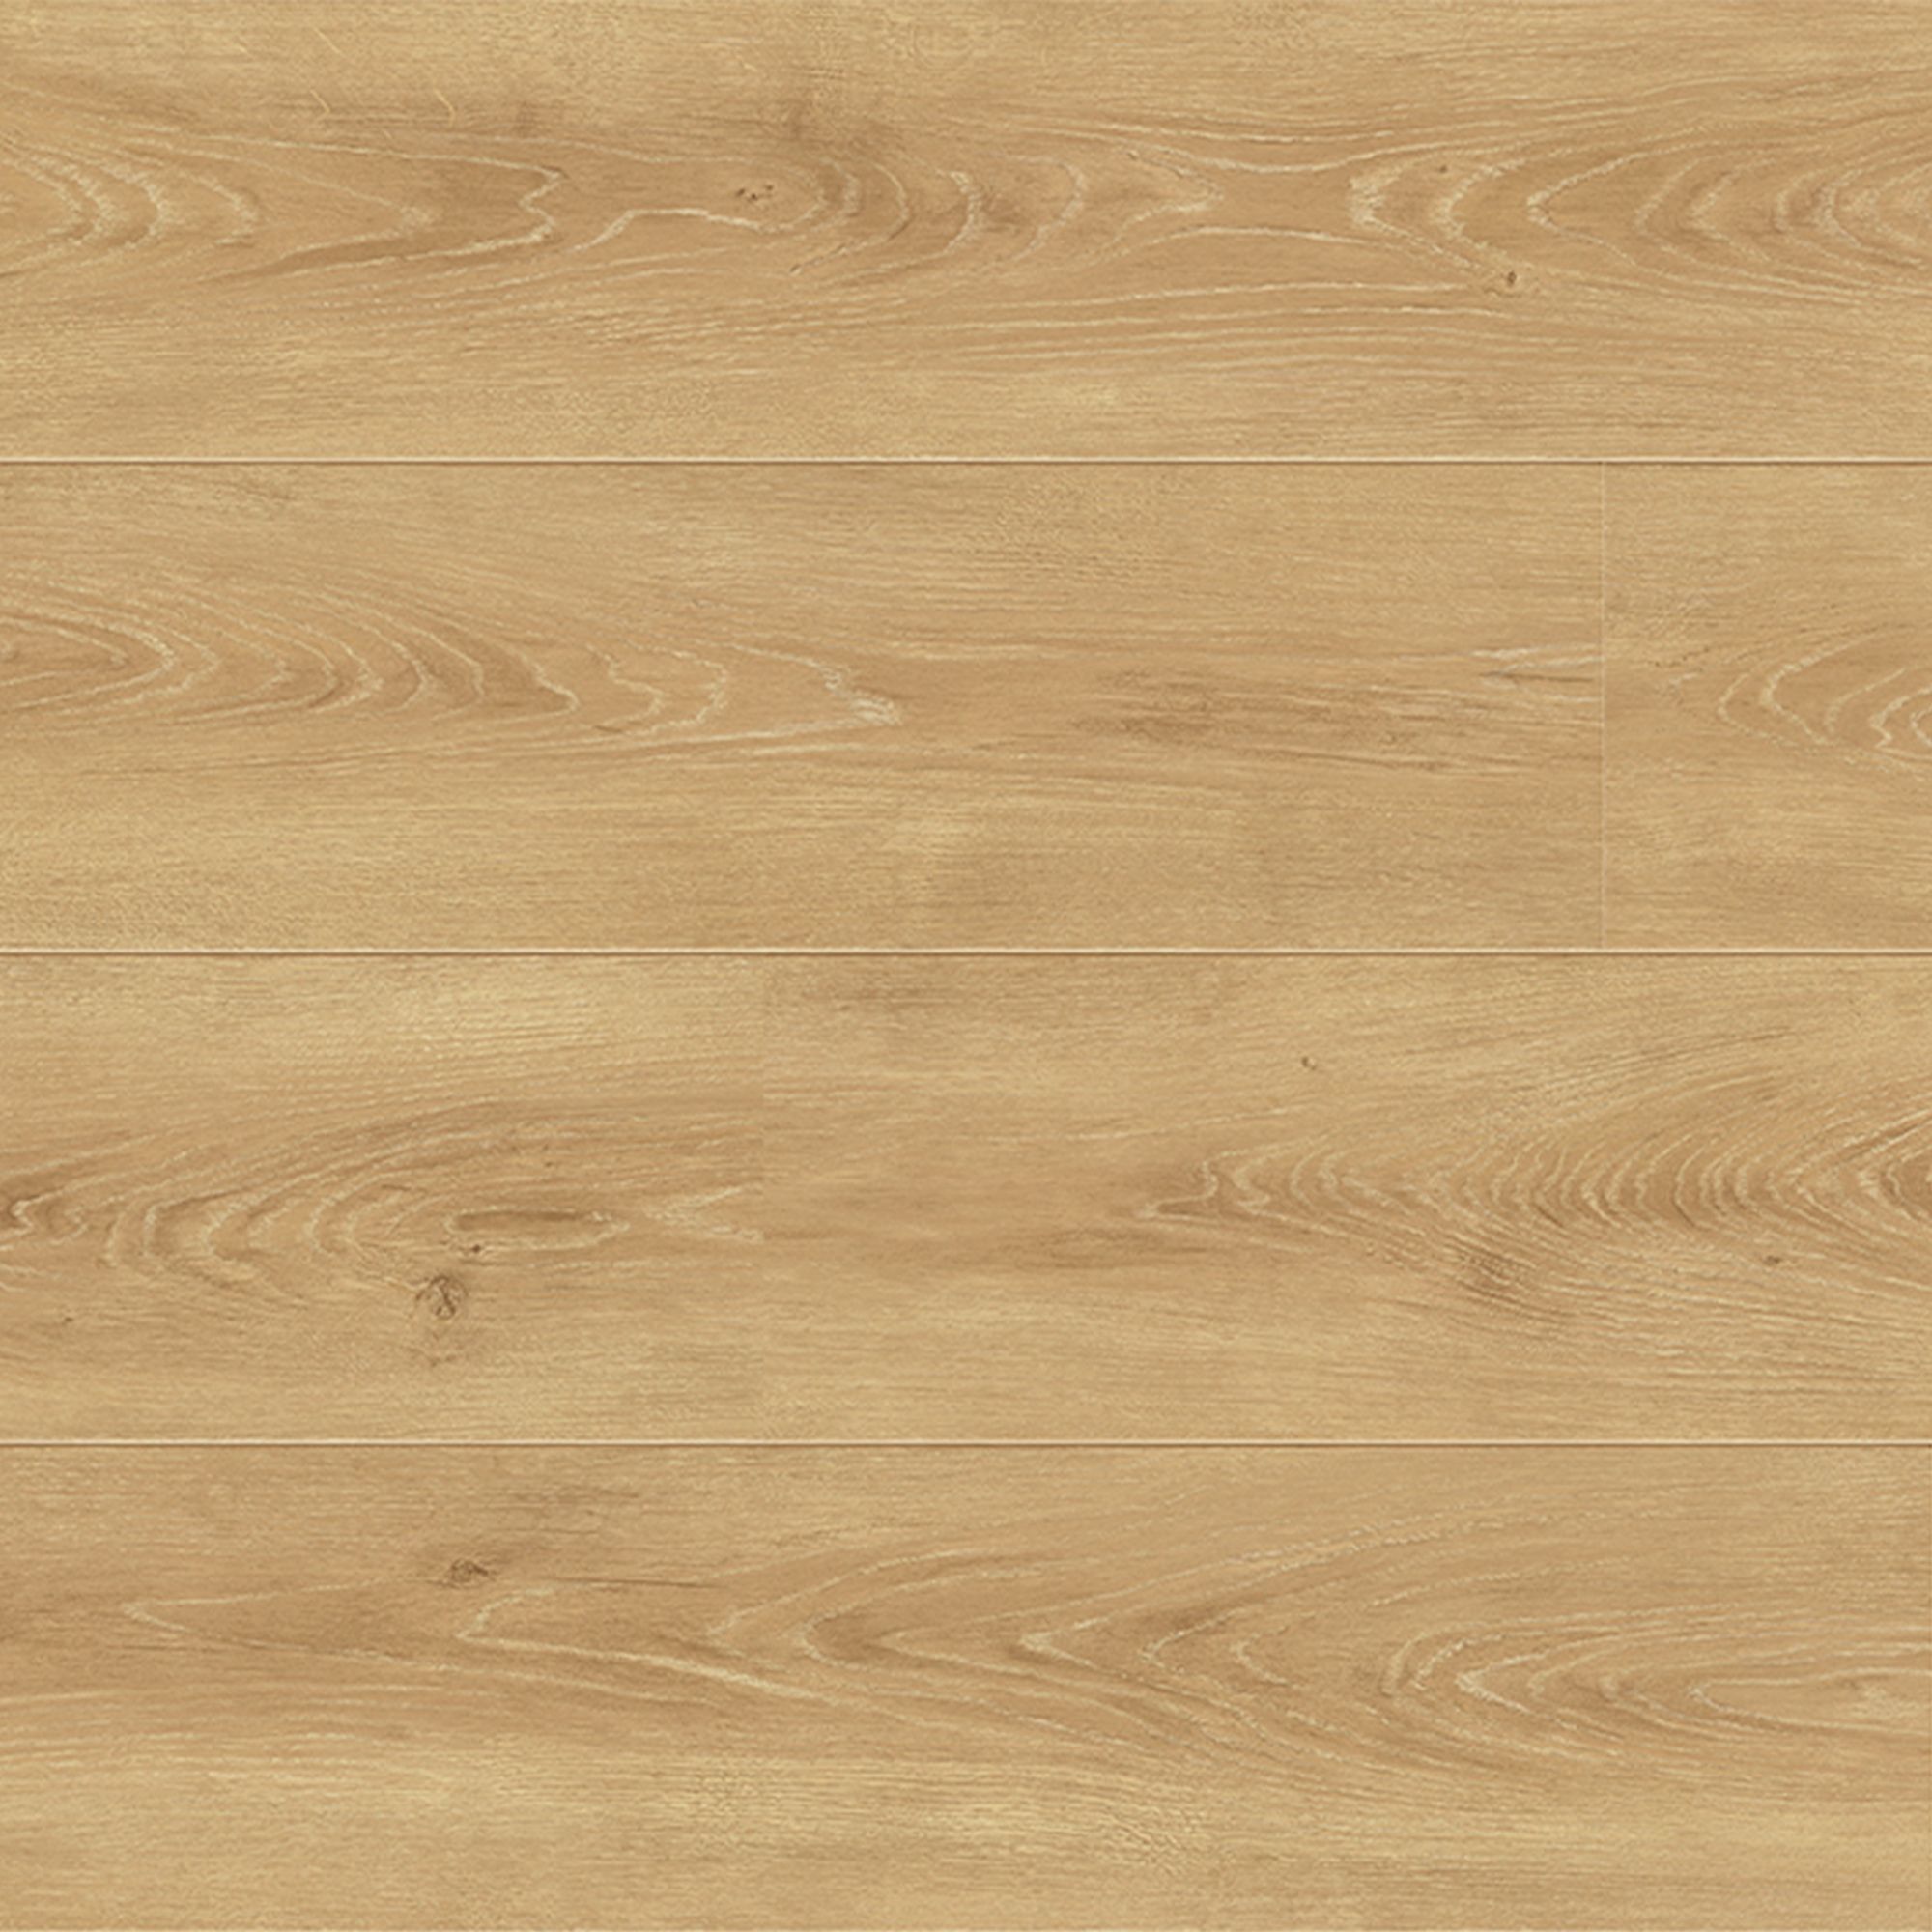 GoodHome Southwell Natural oak effect Laminate flooring Sample